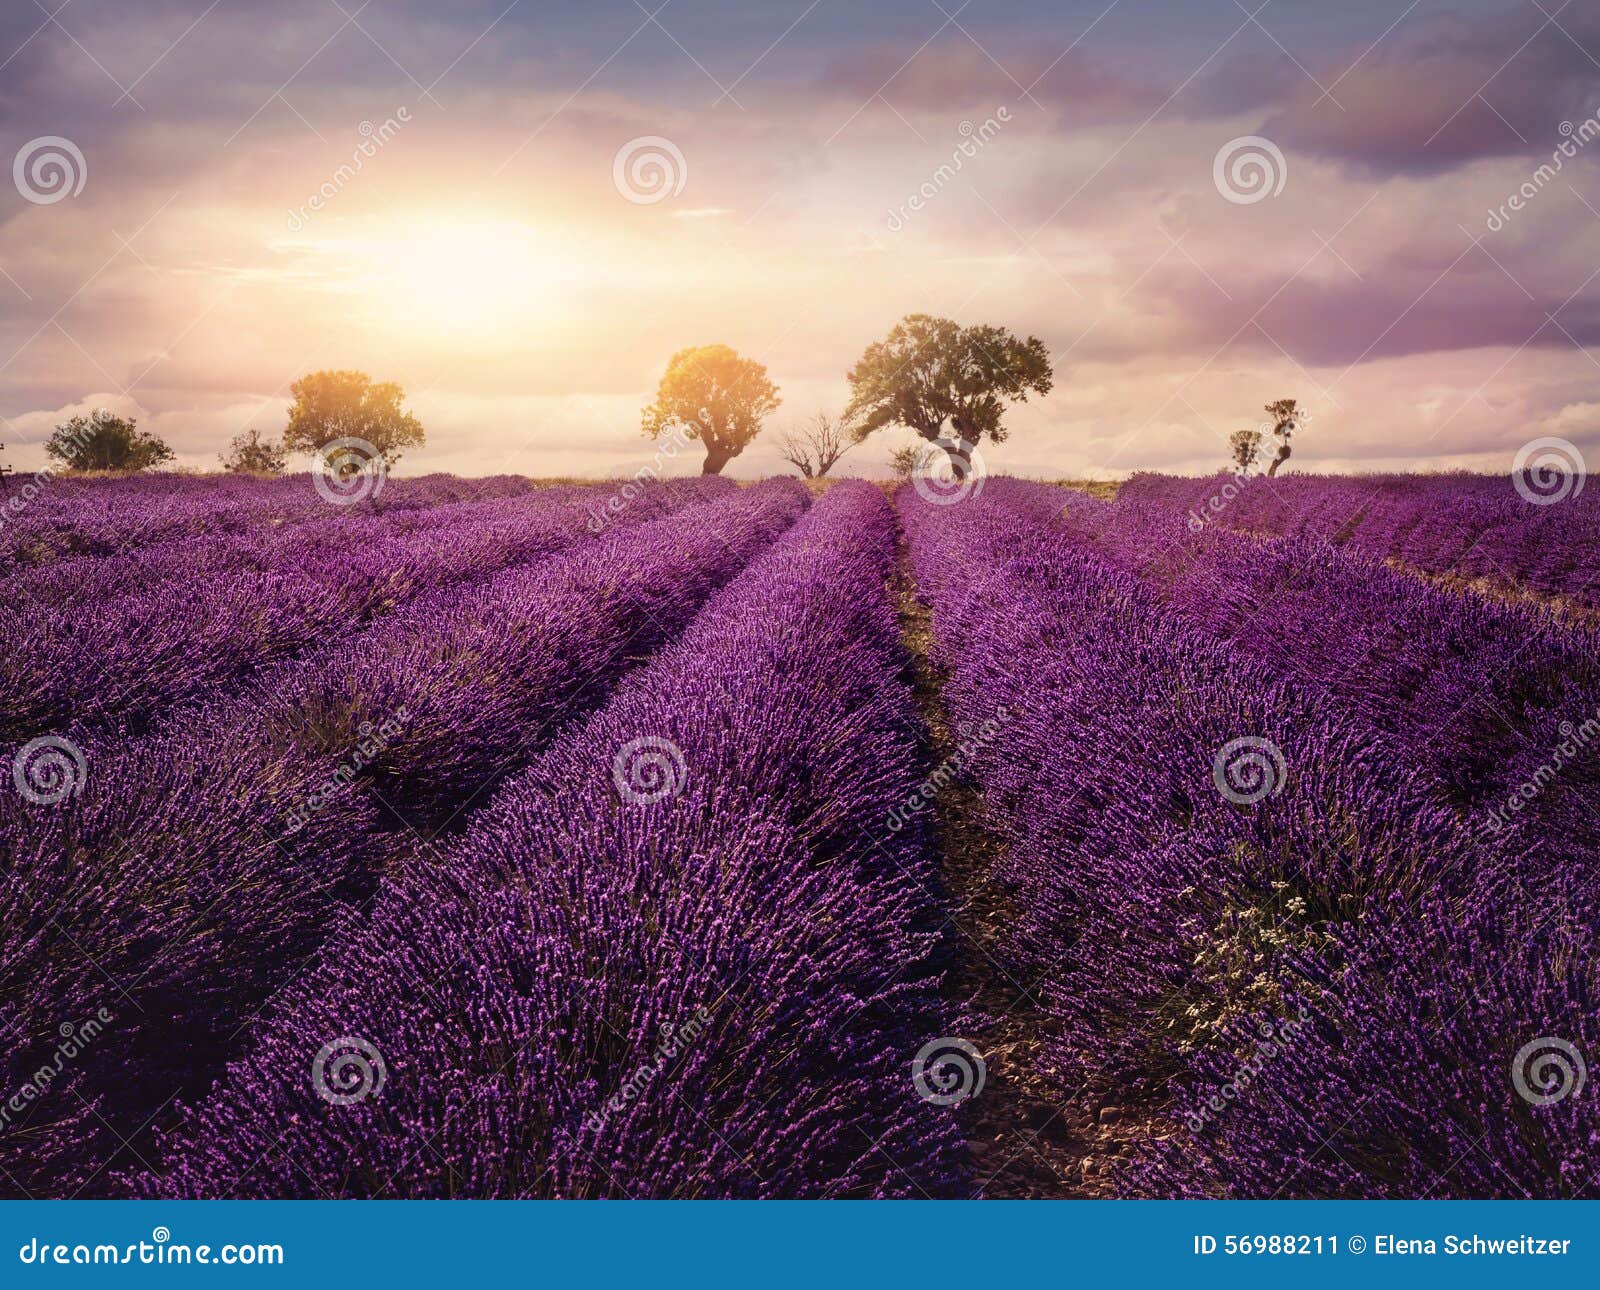 Lavender field stock image. Image of scene, beauty, lavender - 56988211